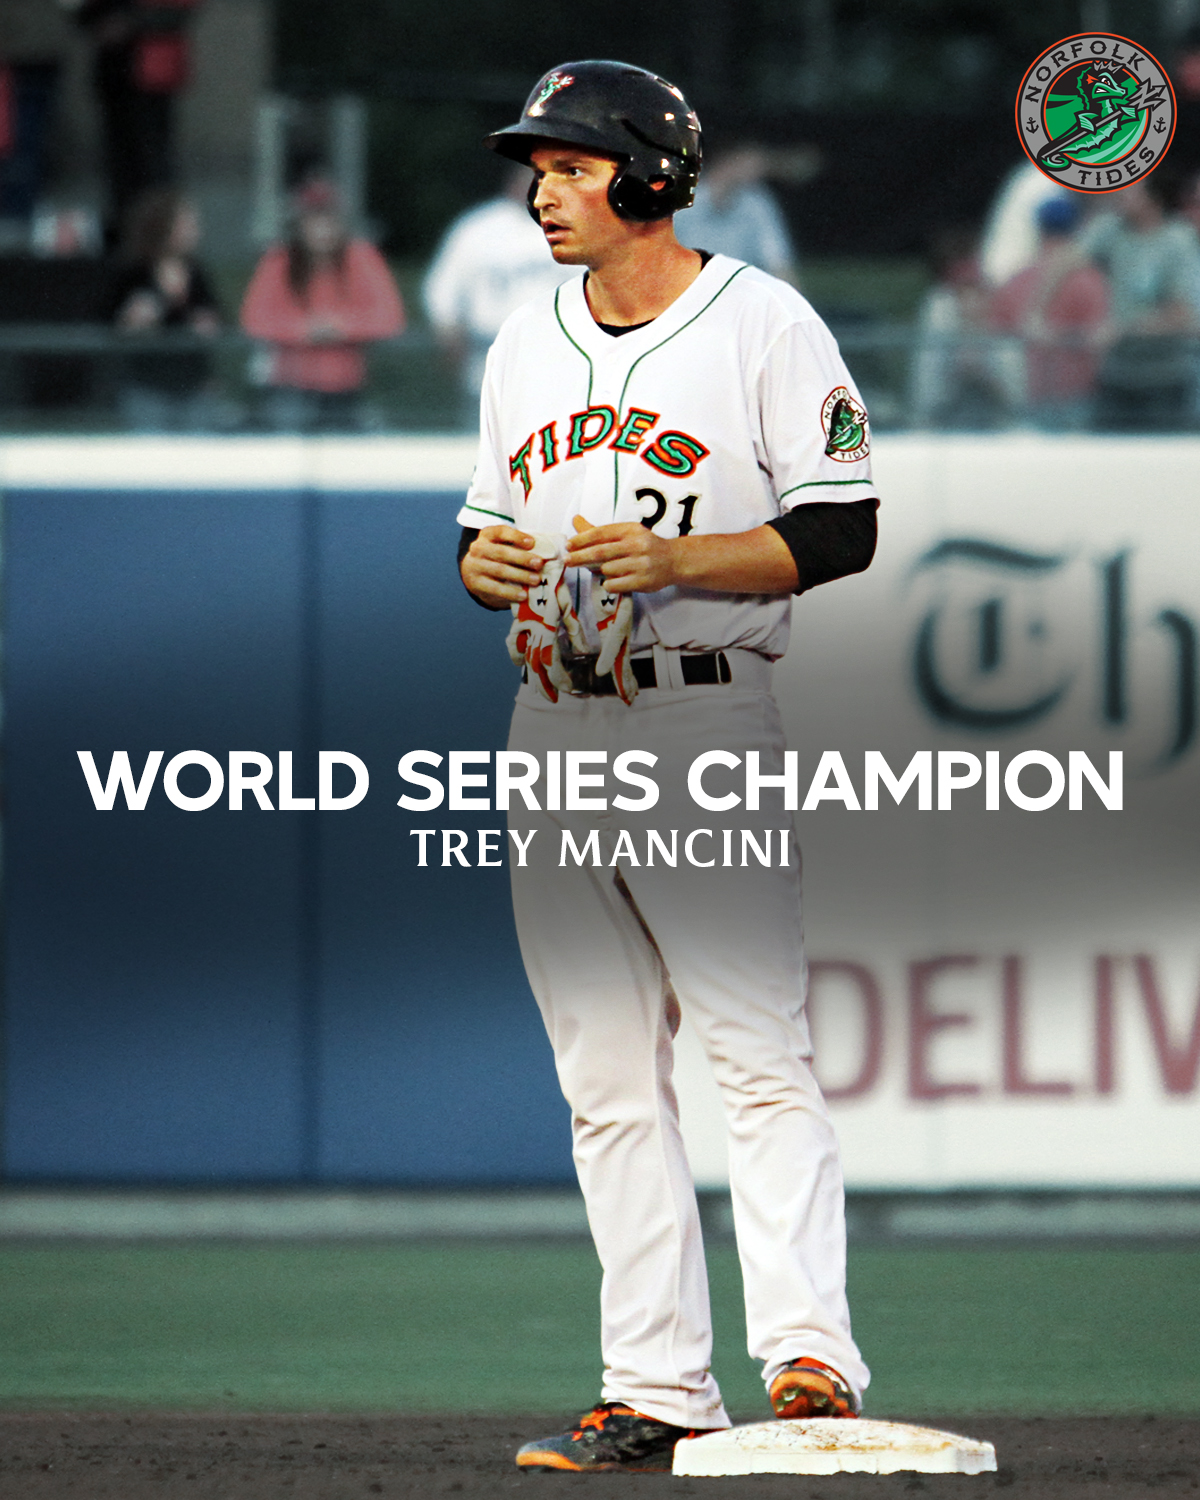 Astros' Trey Mancini on his first World Series Championship